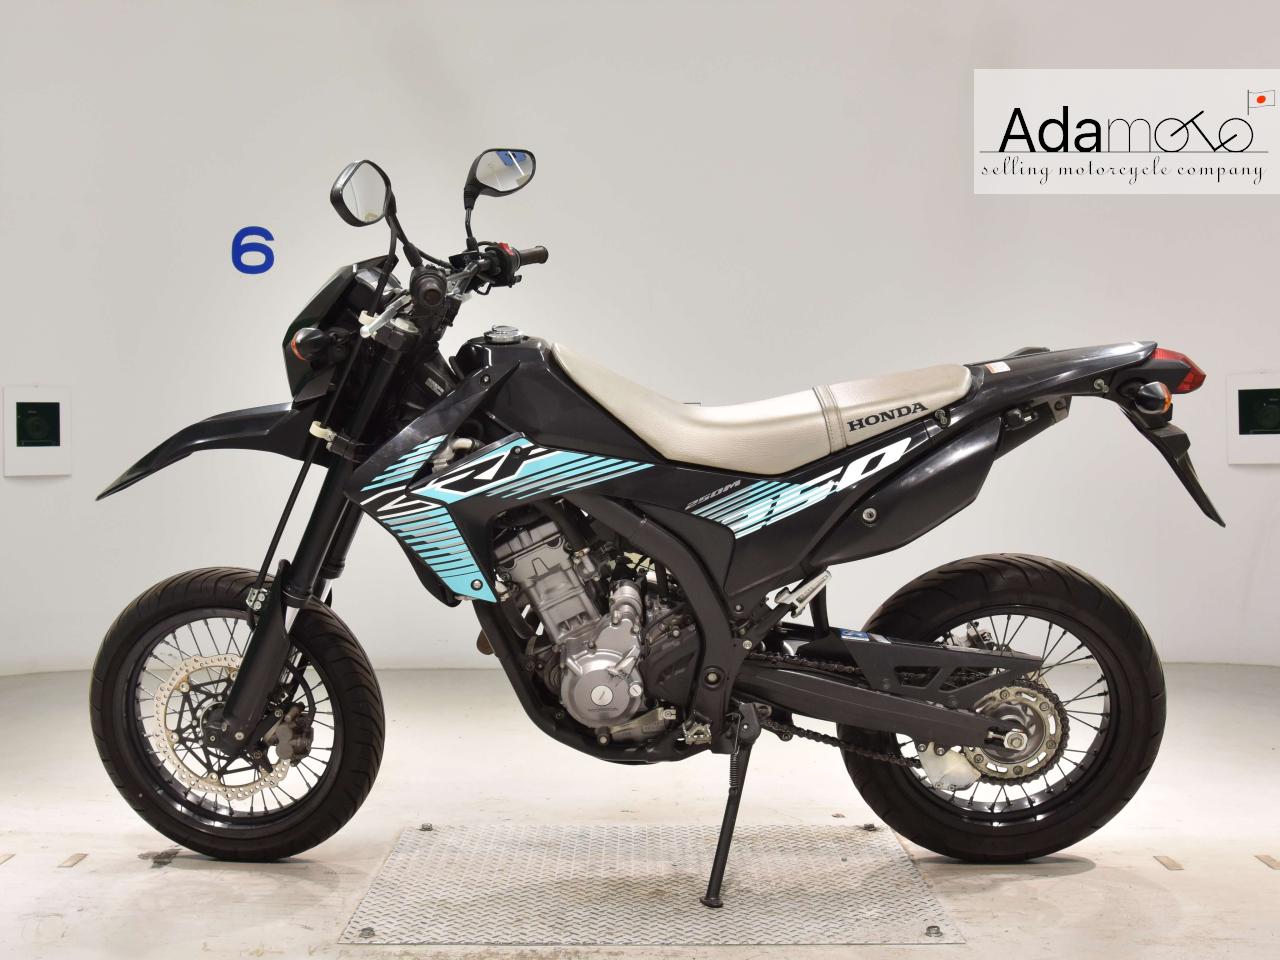 Honda CRF250M - Adamoto - Motorcycles from Japan